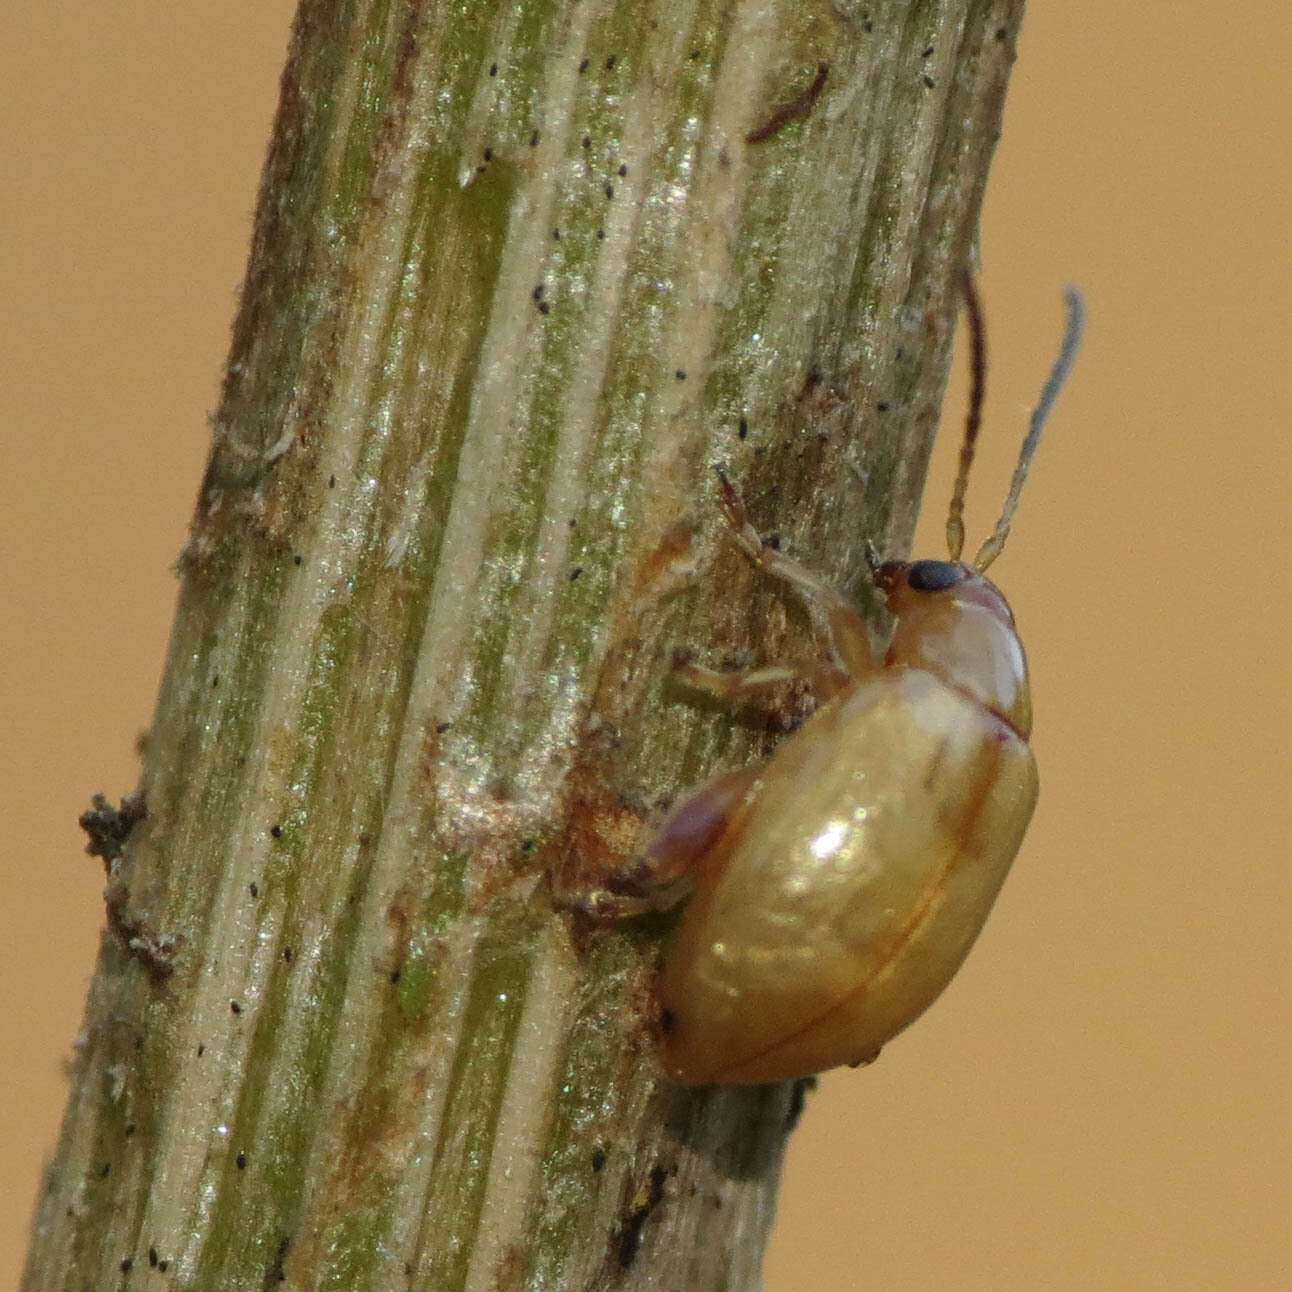 Image of Tansy Ragwort Flea Beetle